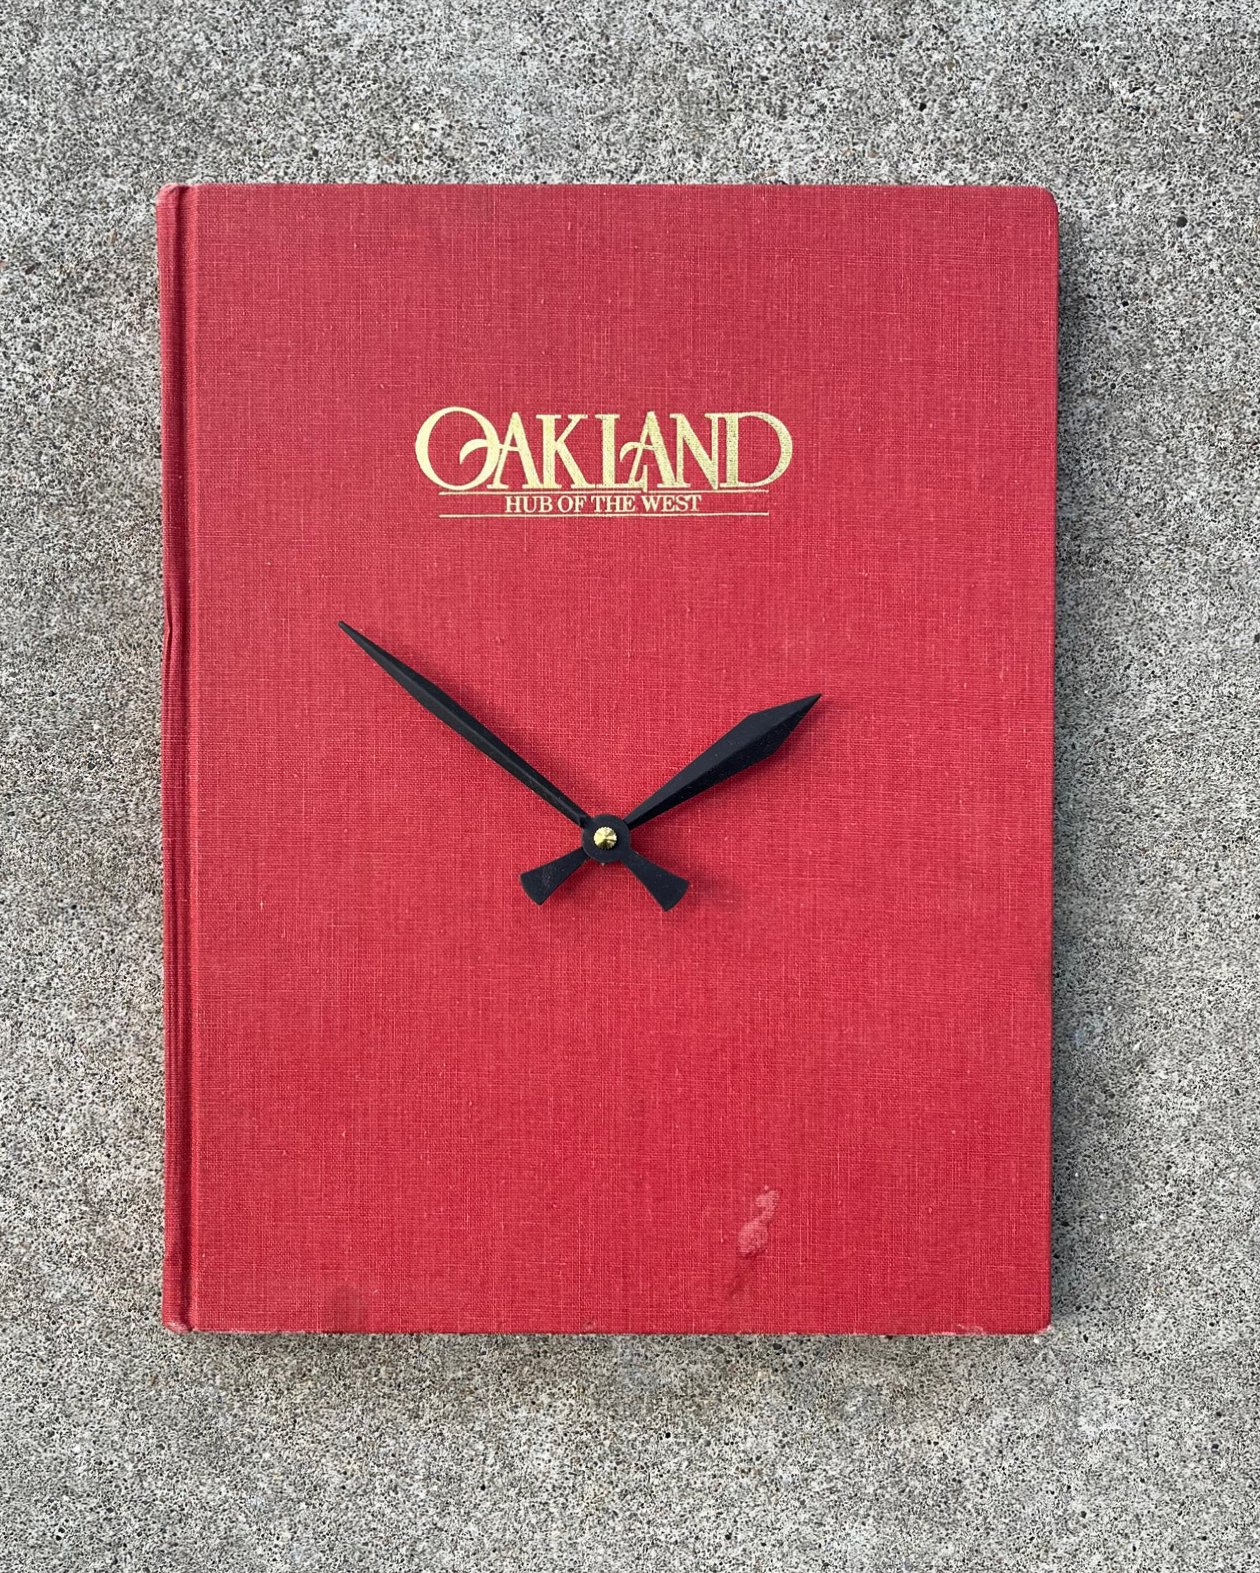 Oakland Book Clock by Jim Rosenau